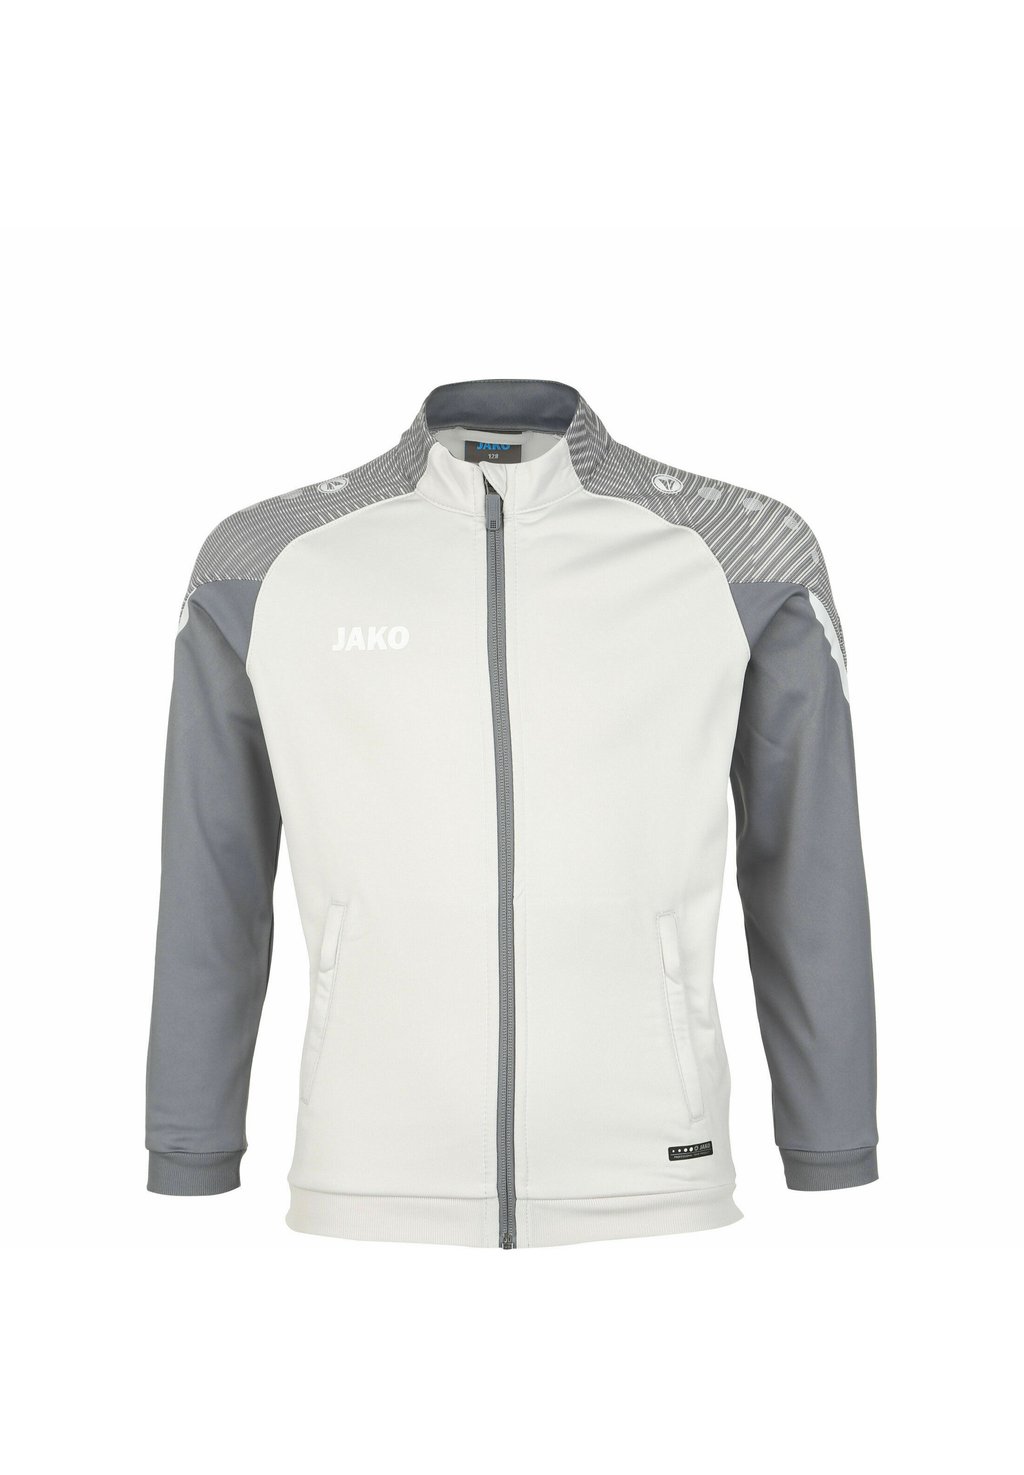 Спортивная куртка Performance JAKO, цвет soft grey steingrau